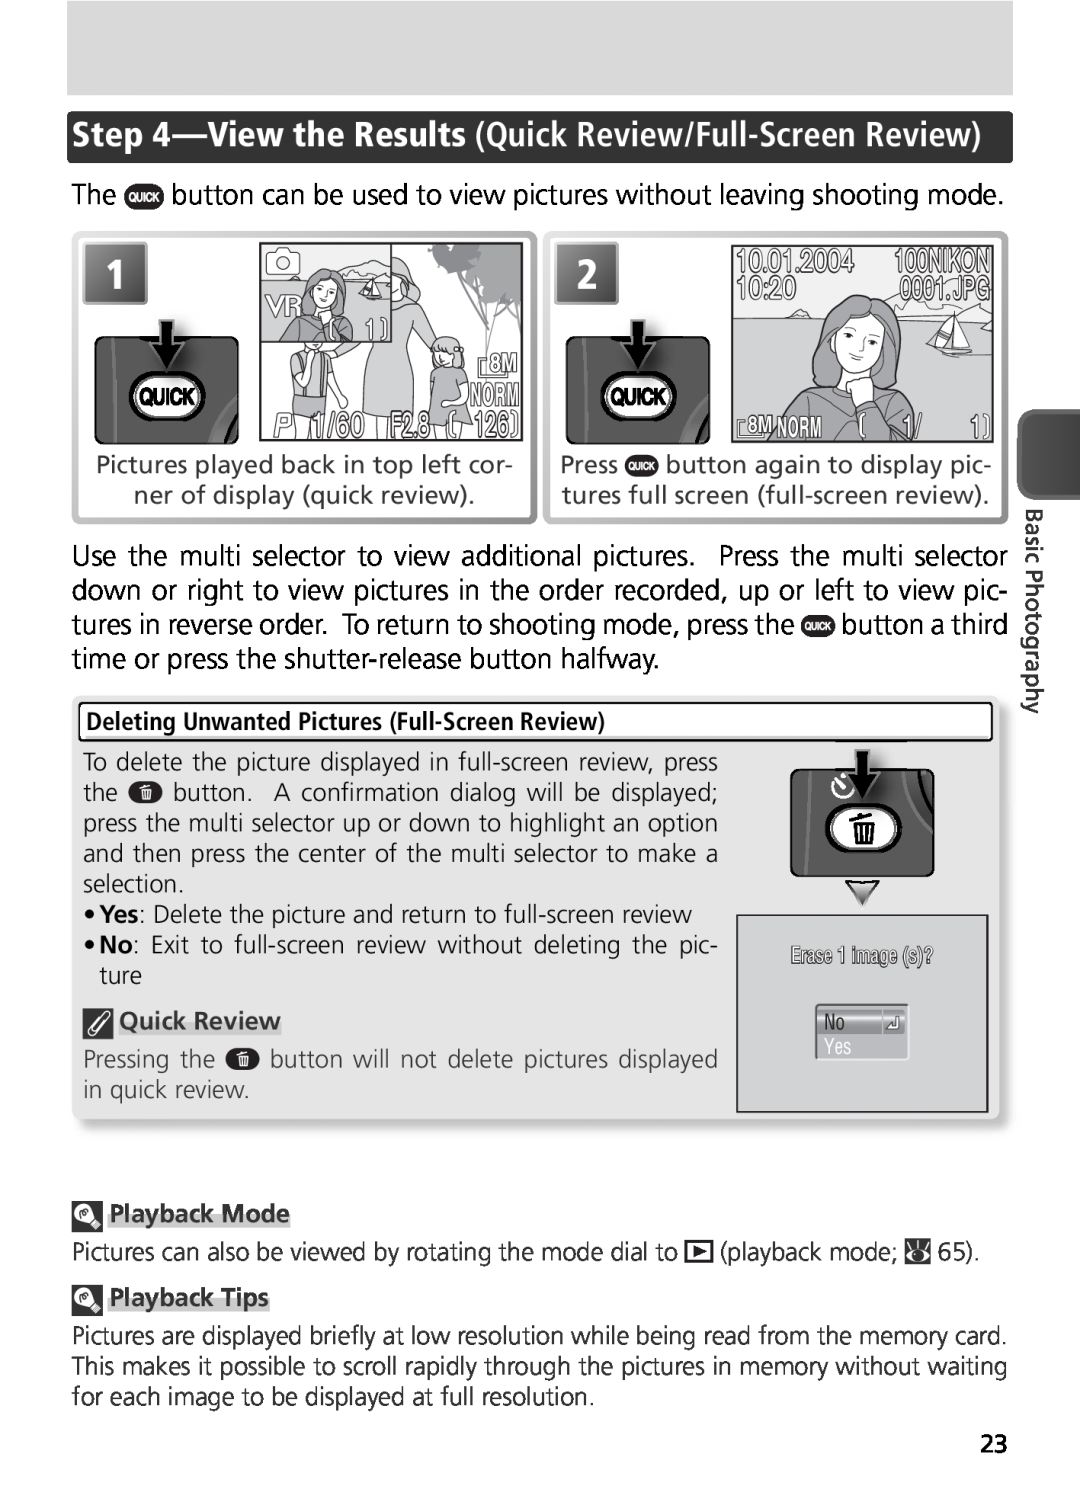 Nikon COOLPIX8800 manual View the Results Quick Review/Full-Screen Review, 1020, F2.8, 10.01.2004, 100NIKON, 0001.JPG, 1/60 